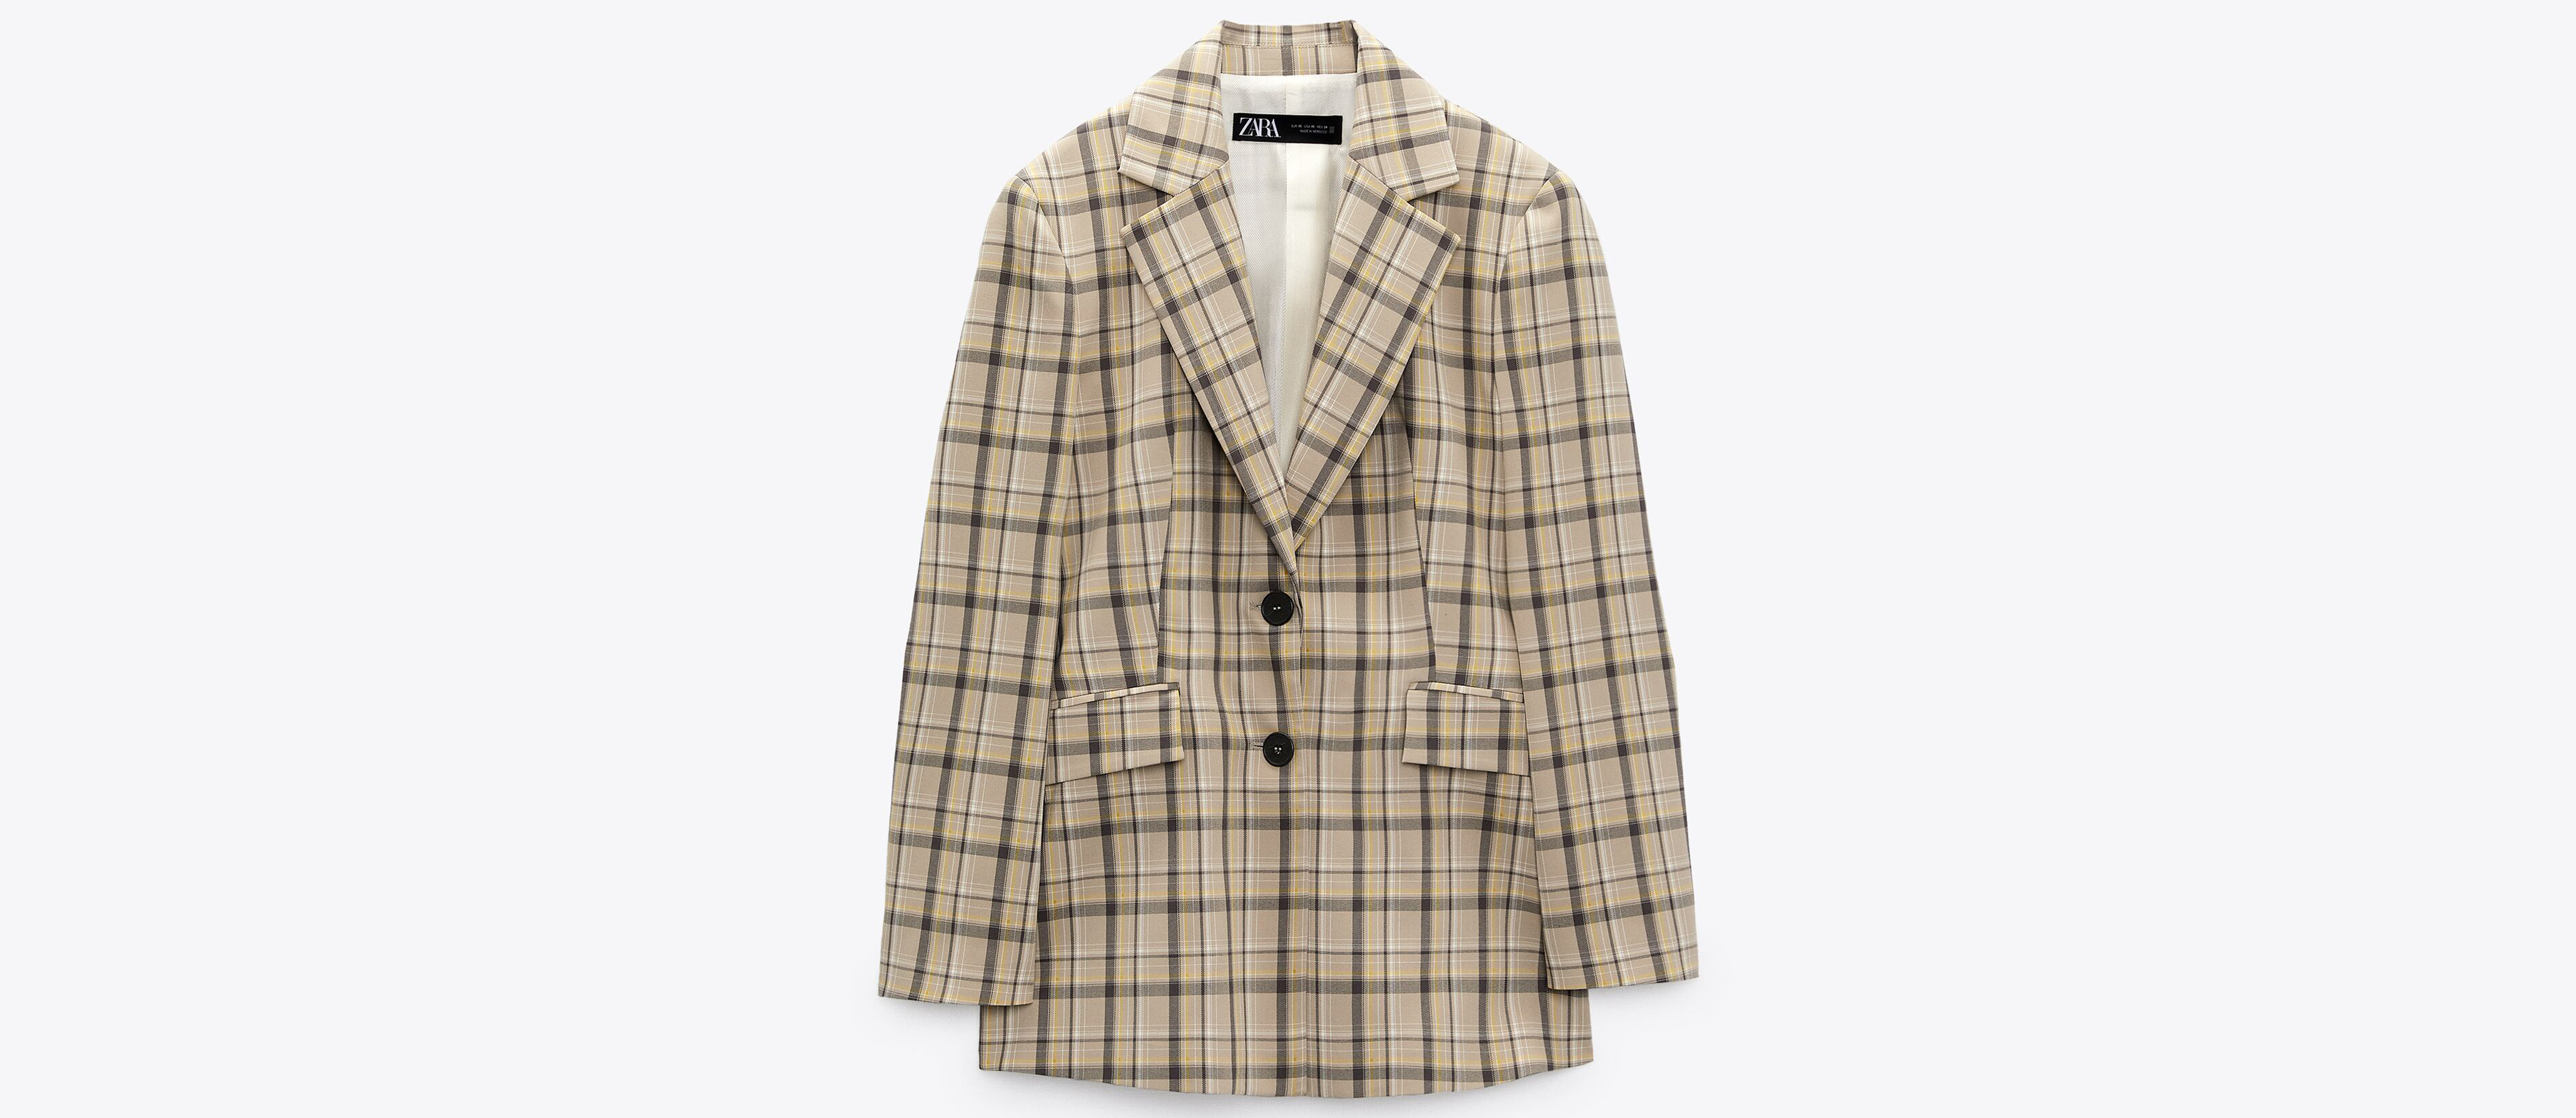 Zara Tailored Check Blazer, £69.99